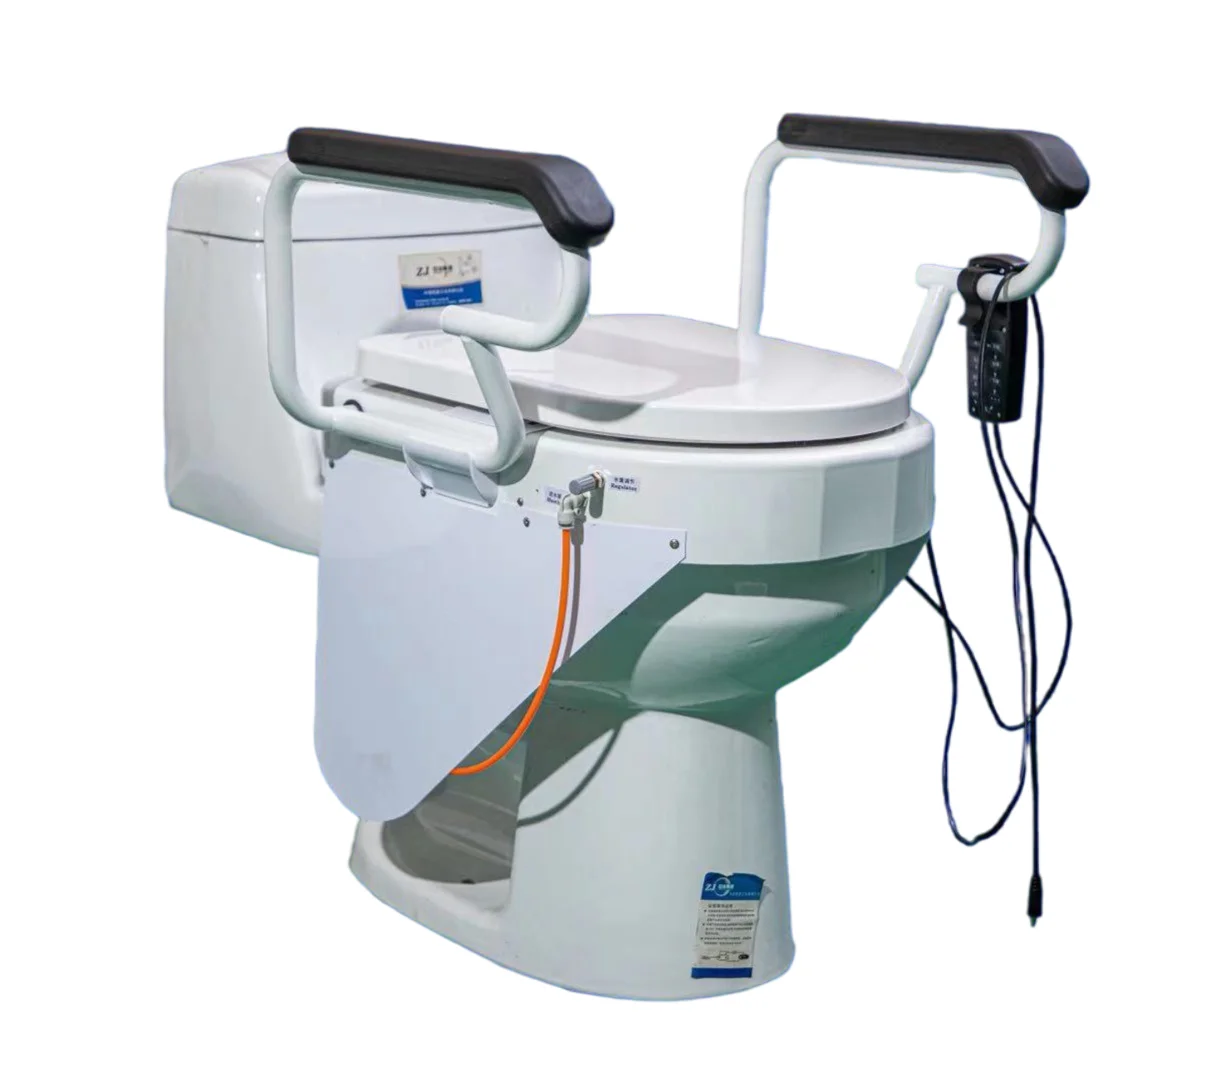 

2021 new design smart tilt toilet seat incline lift with flush&dry function for elderly handicap disabled person